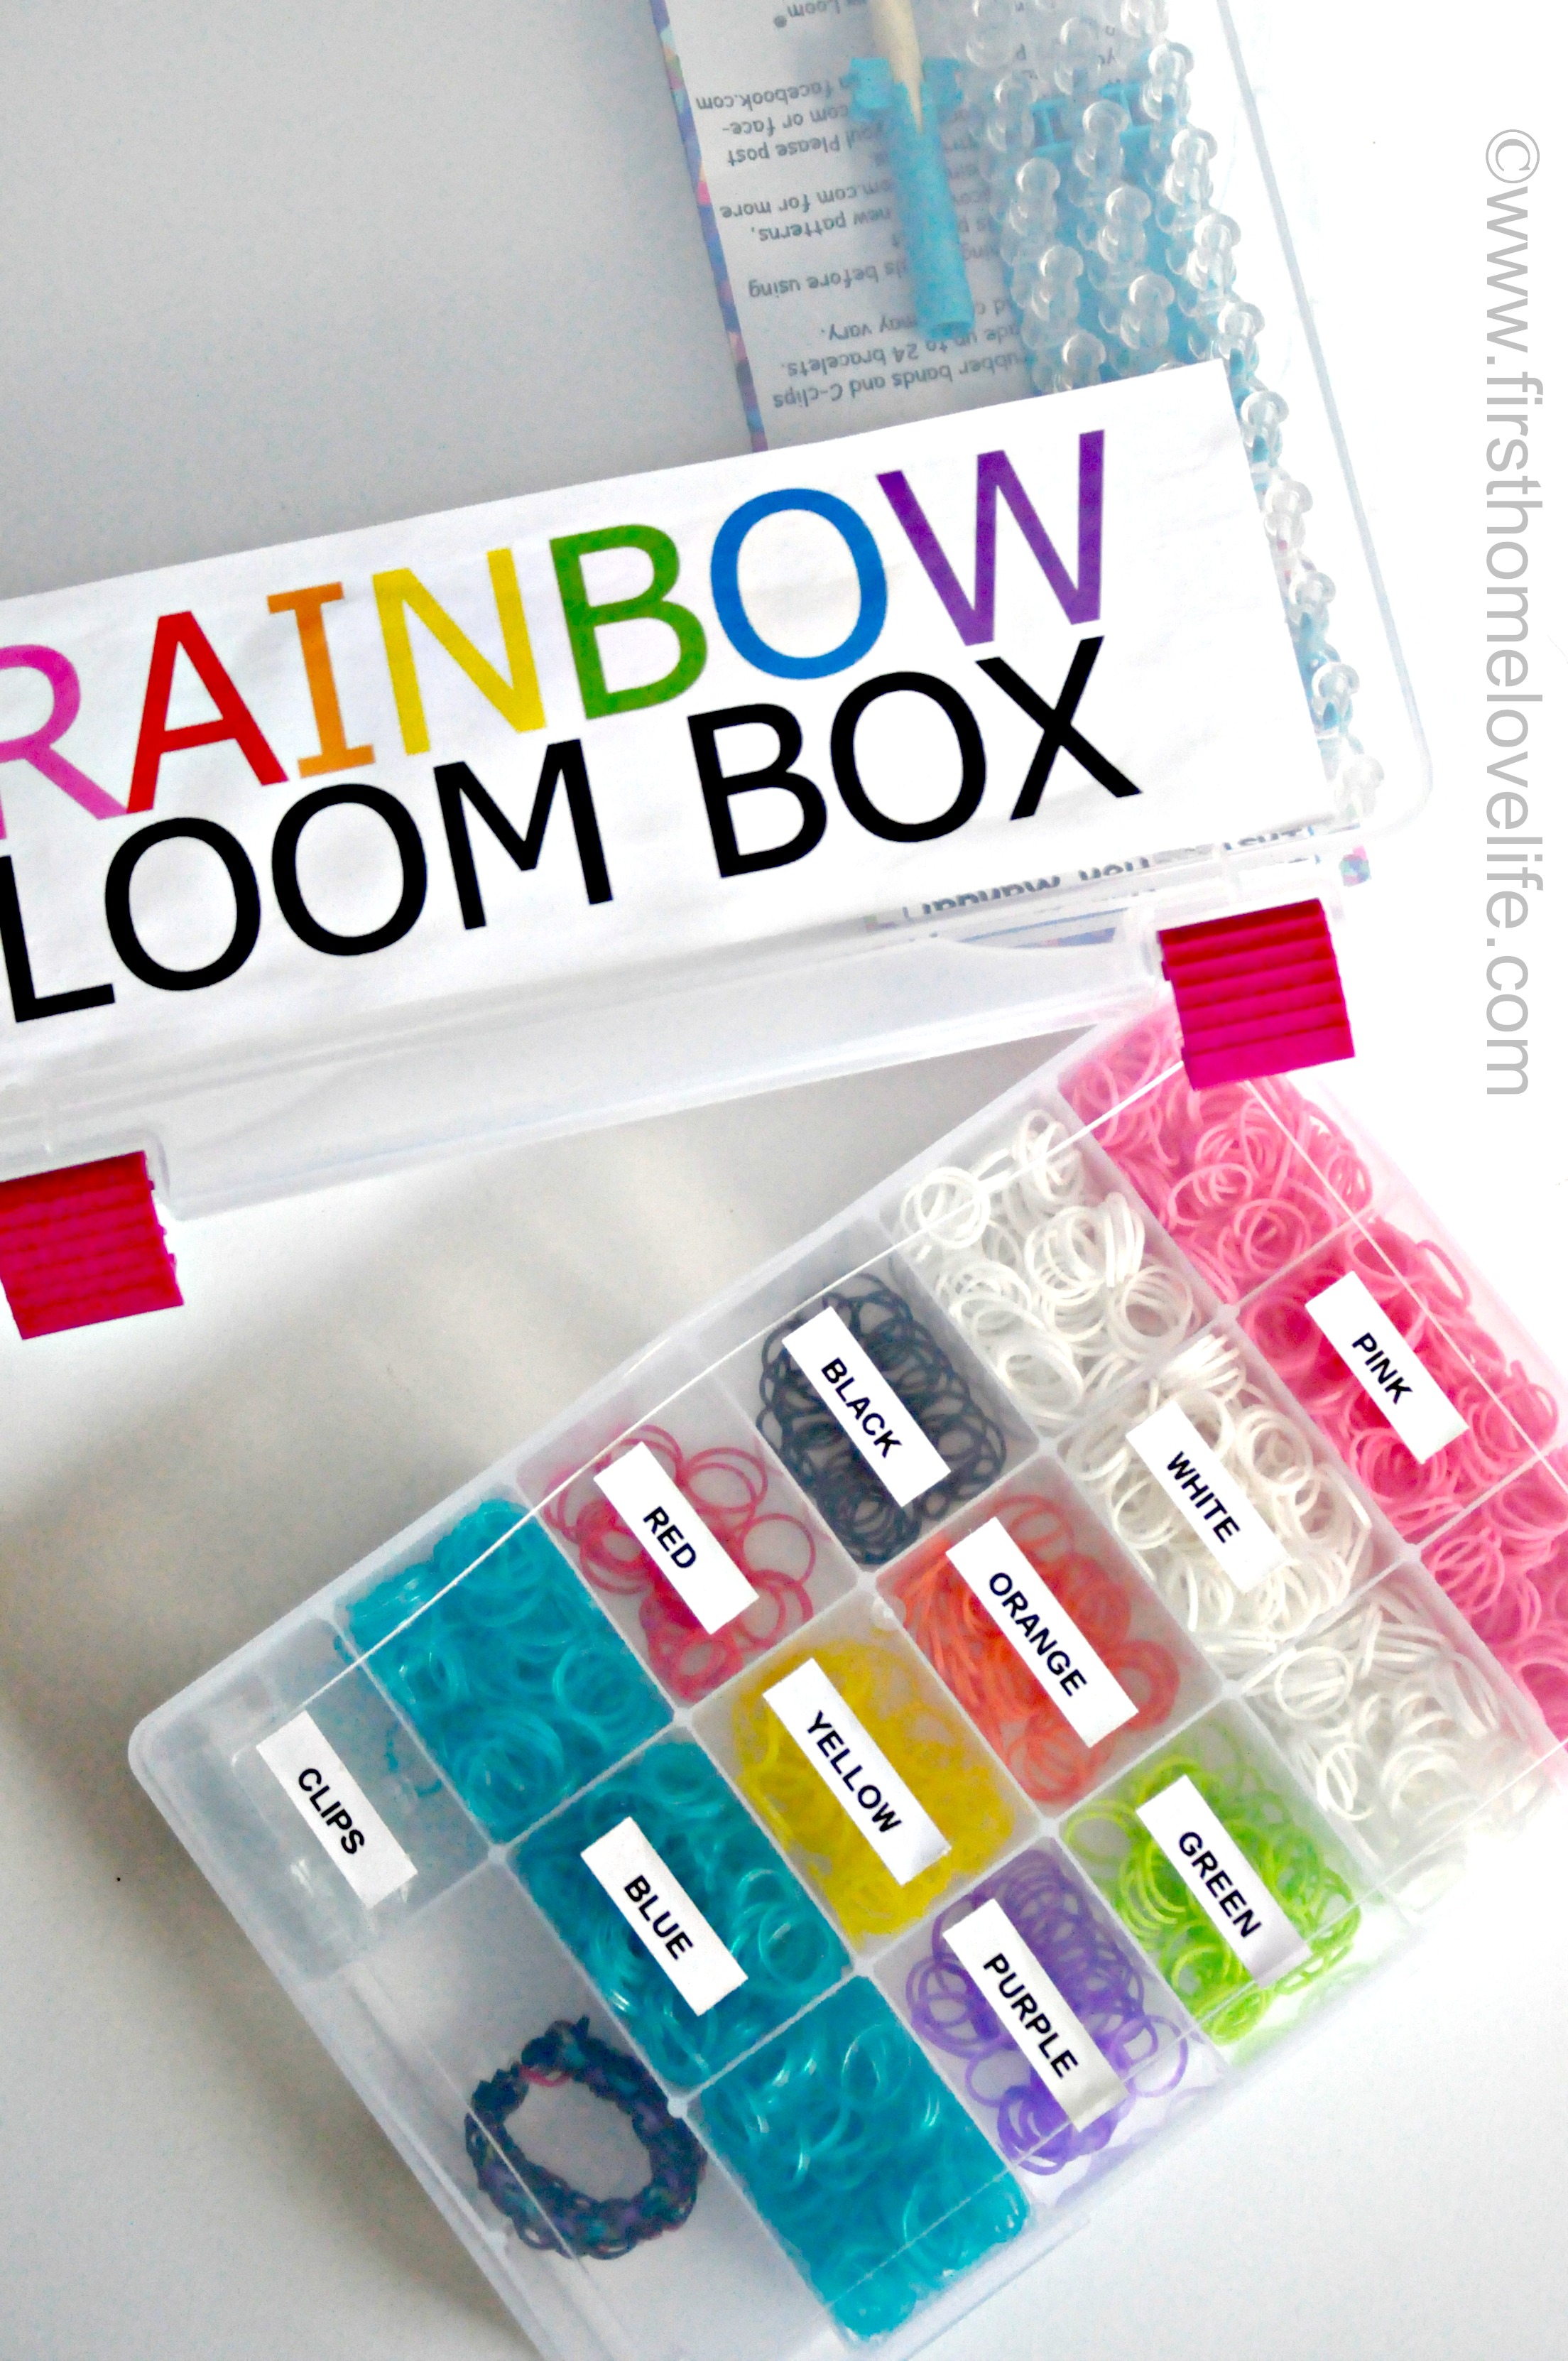 Rainbow Loom Storage Box - First Home Love Life